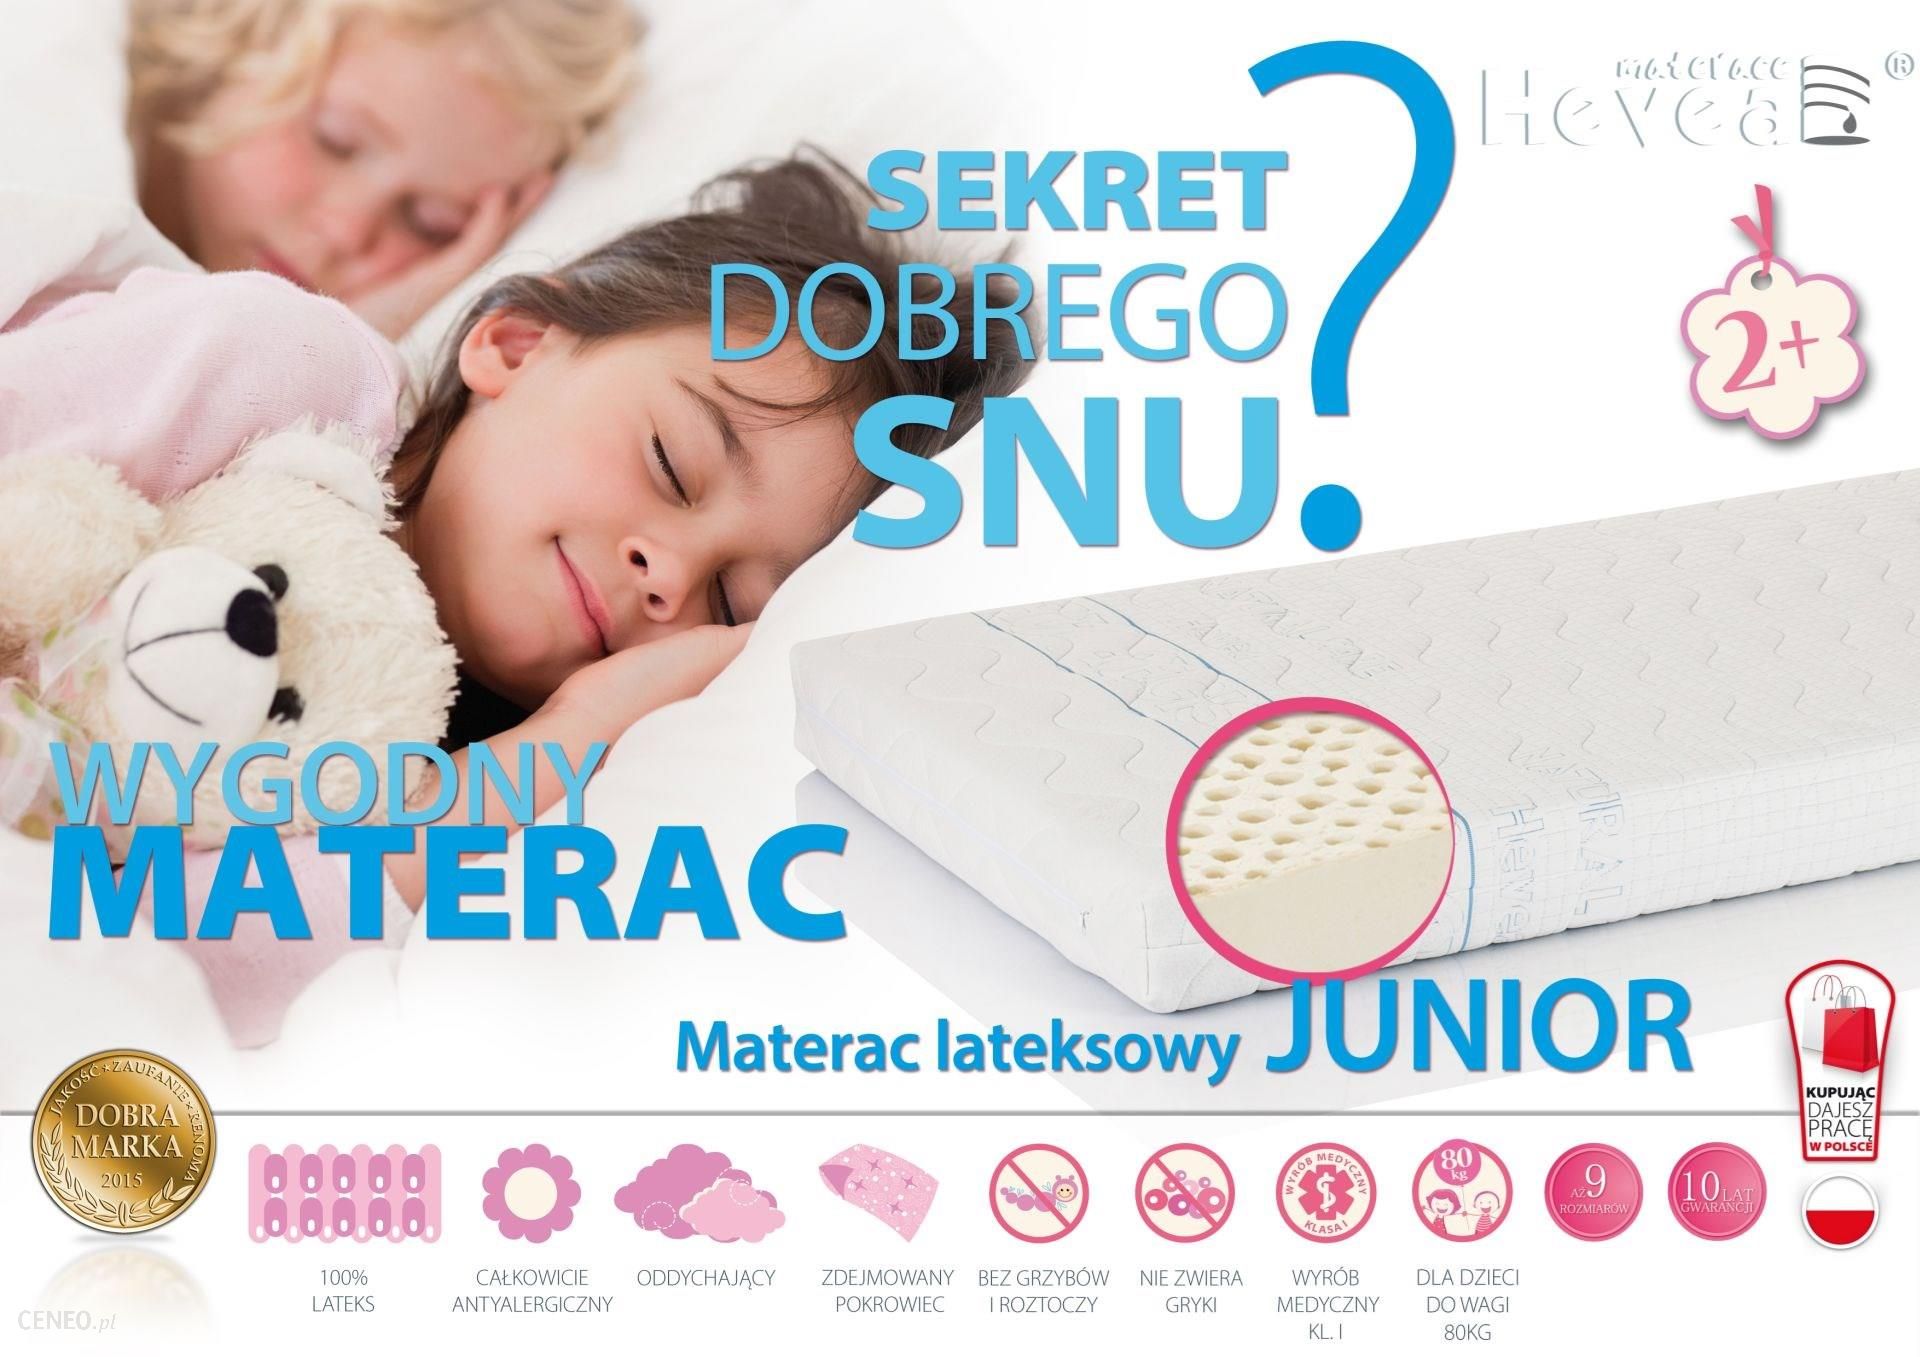 Hevea Materac lateksowy Junior 200x90